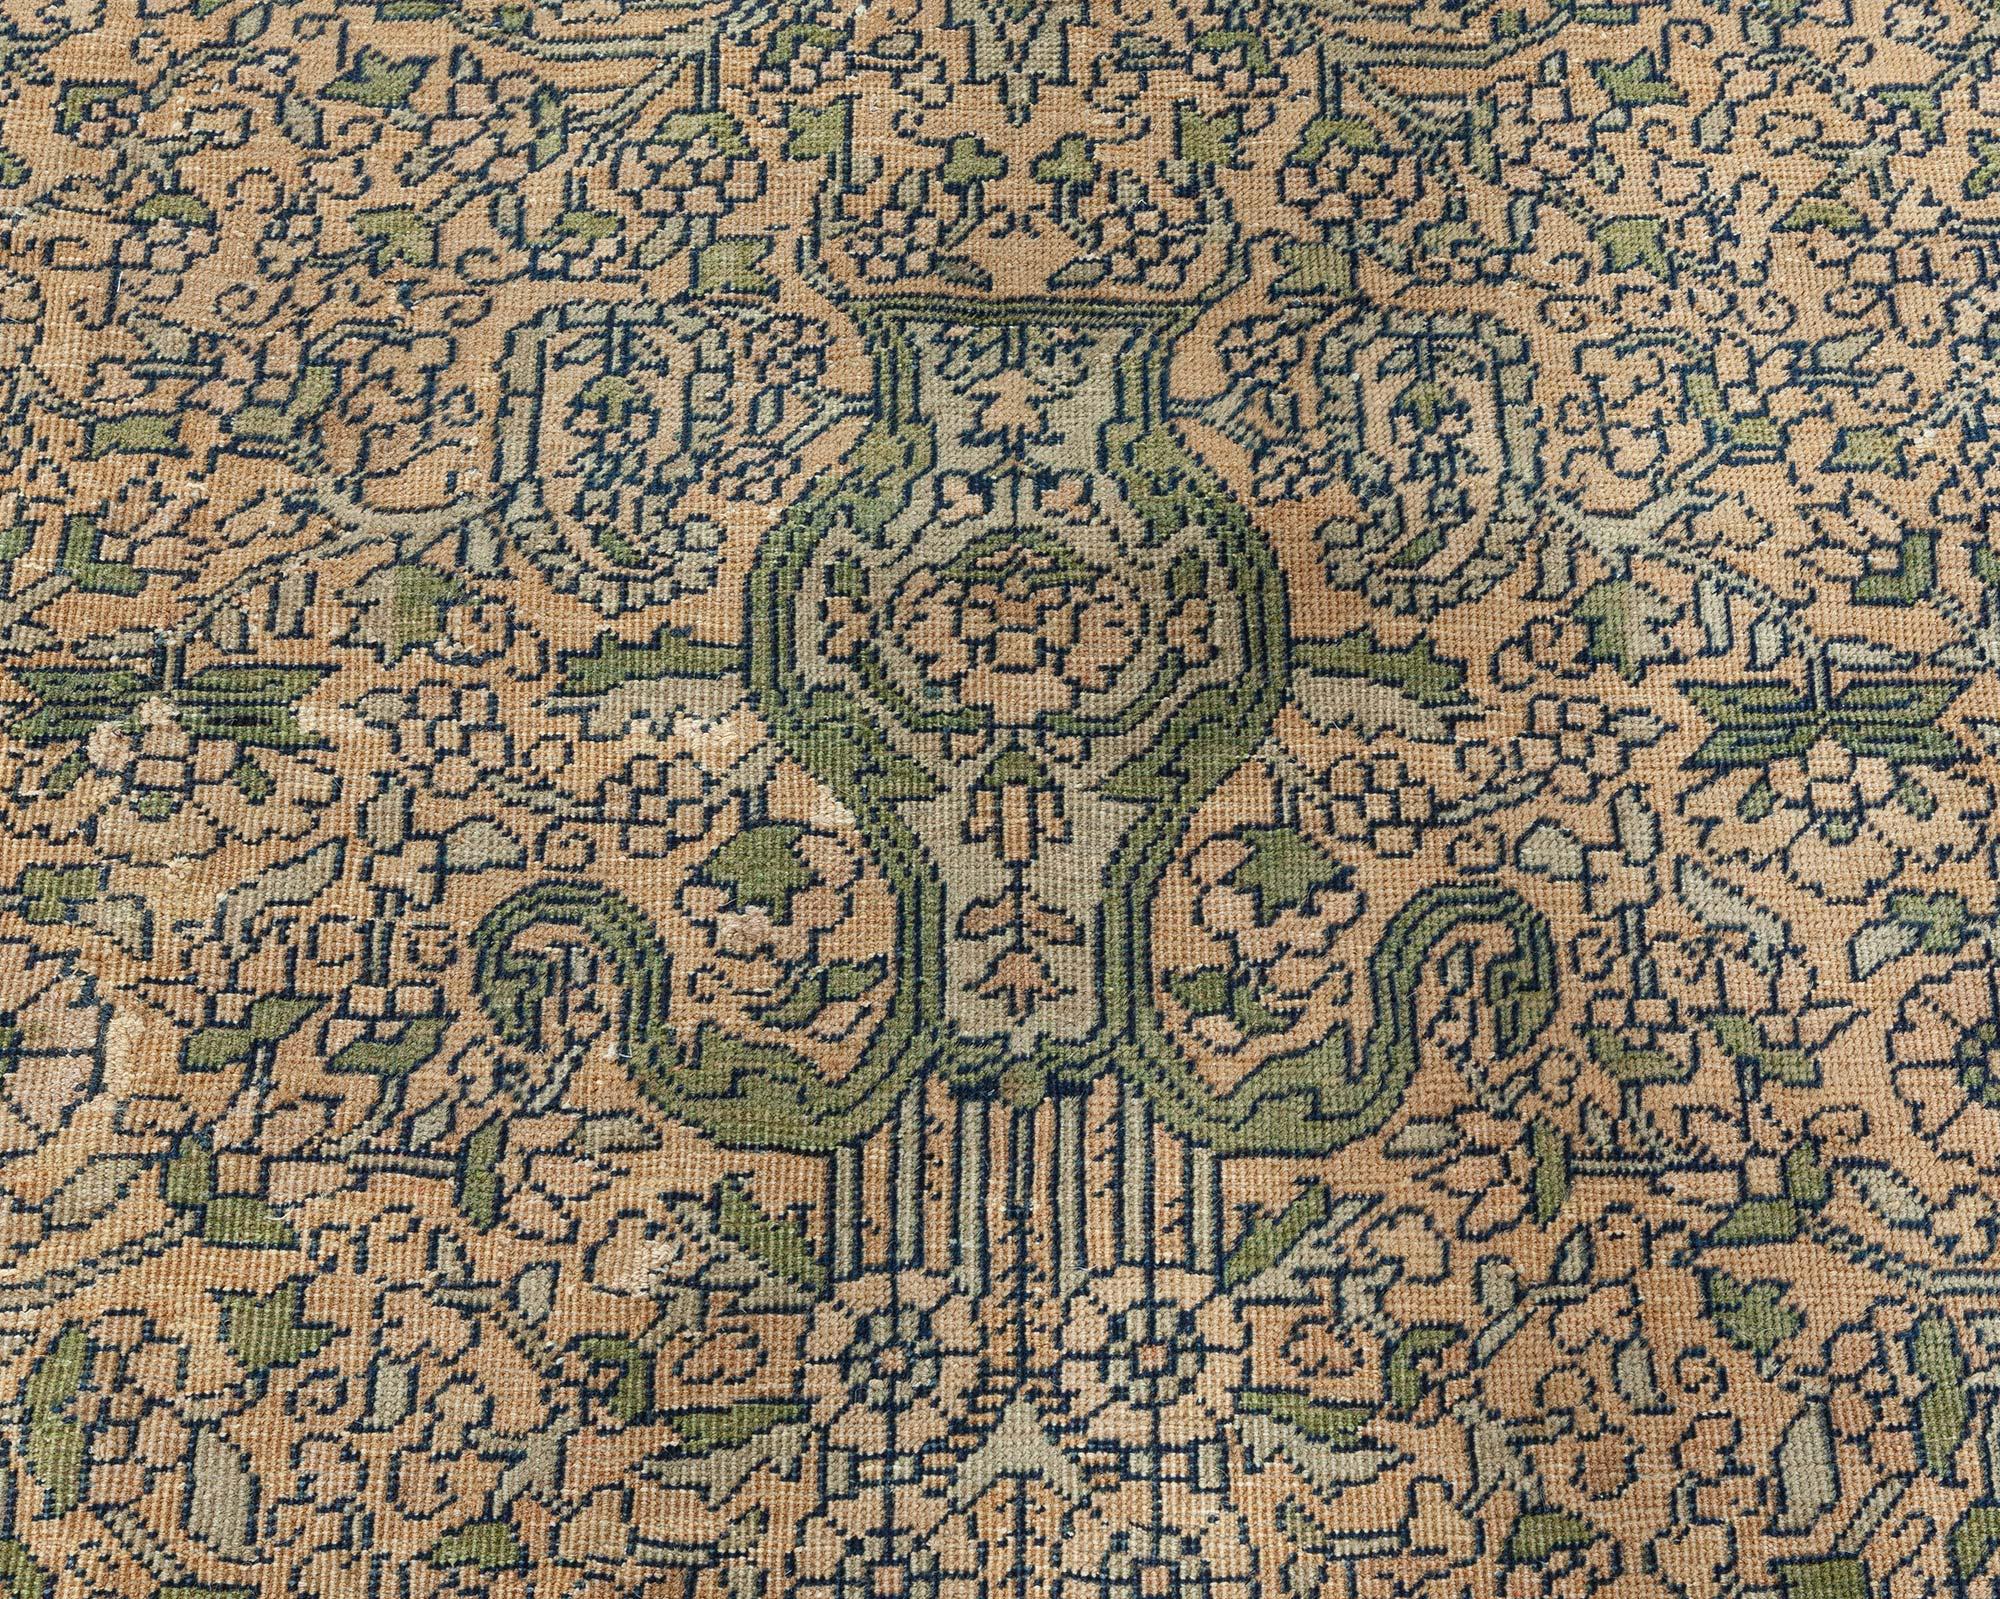 One-of-a-kind Vintage Indian Botanic Handmade Wool Carpet
Size: 11'7